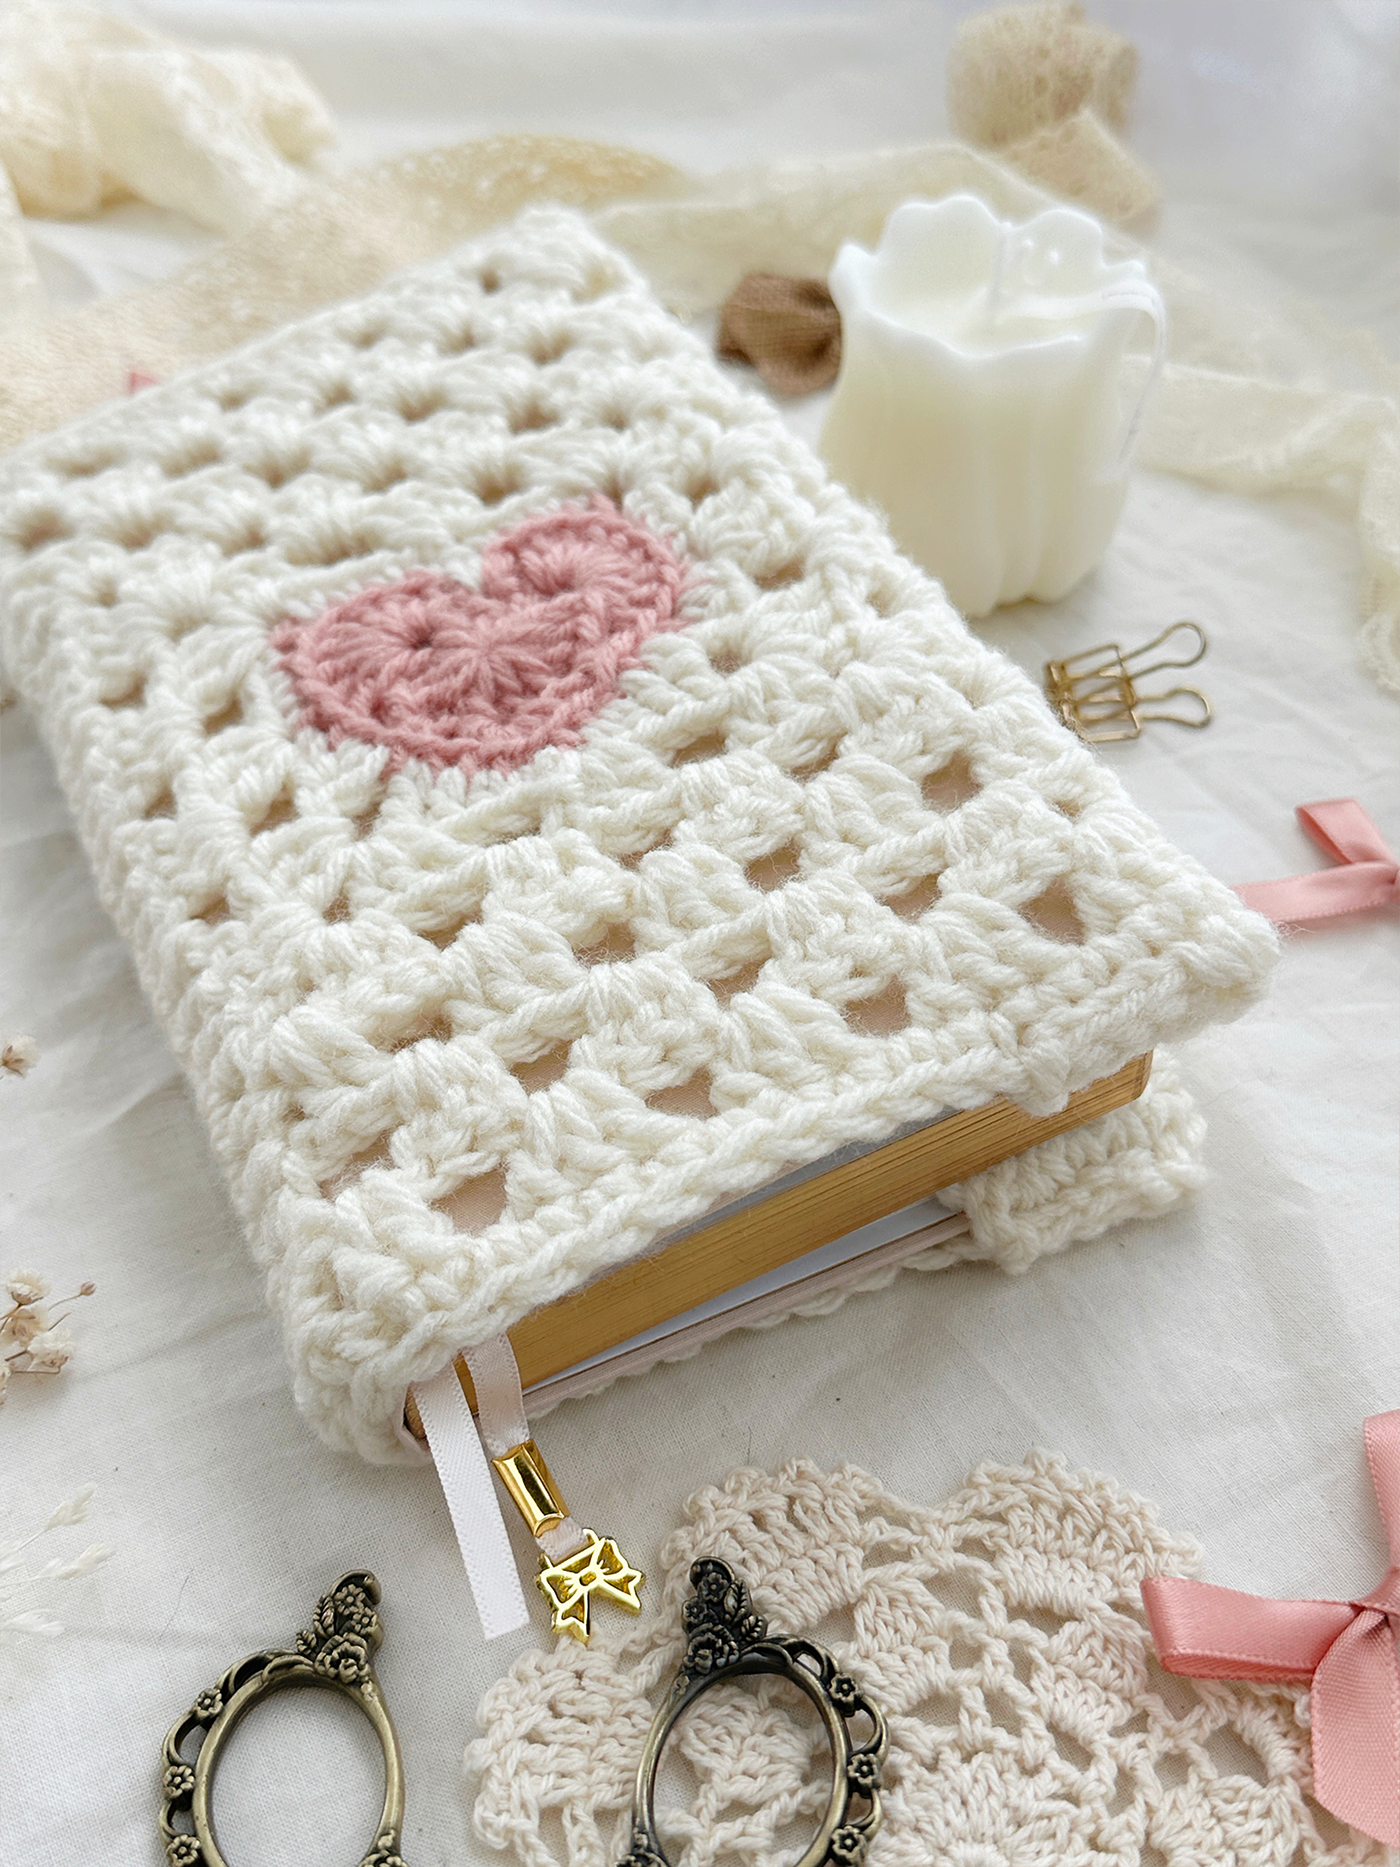 TN pink heart crochet journal cover (plz read description before purchasing!)